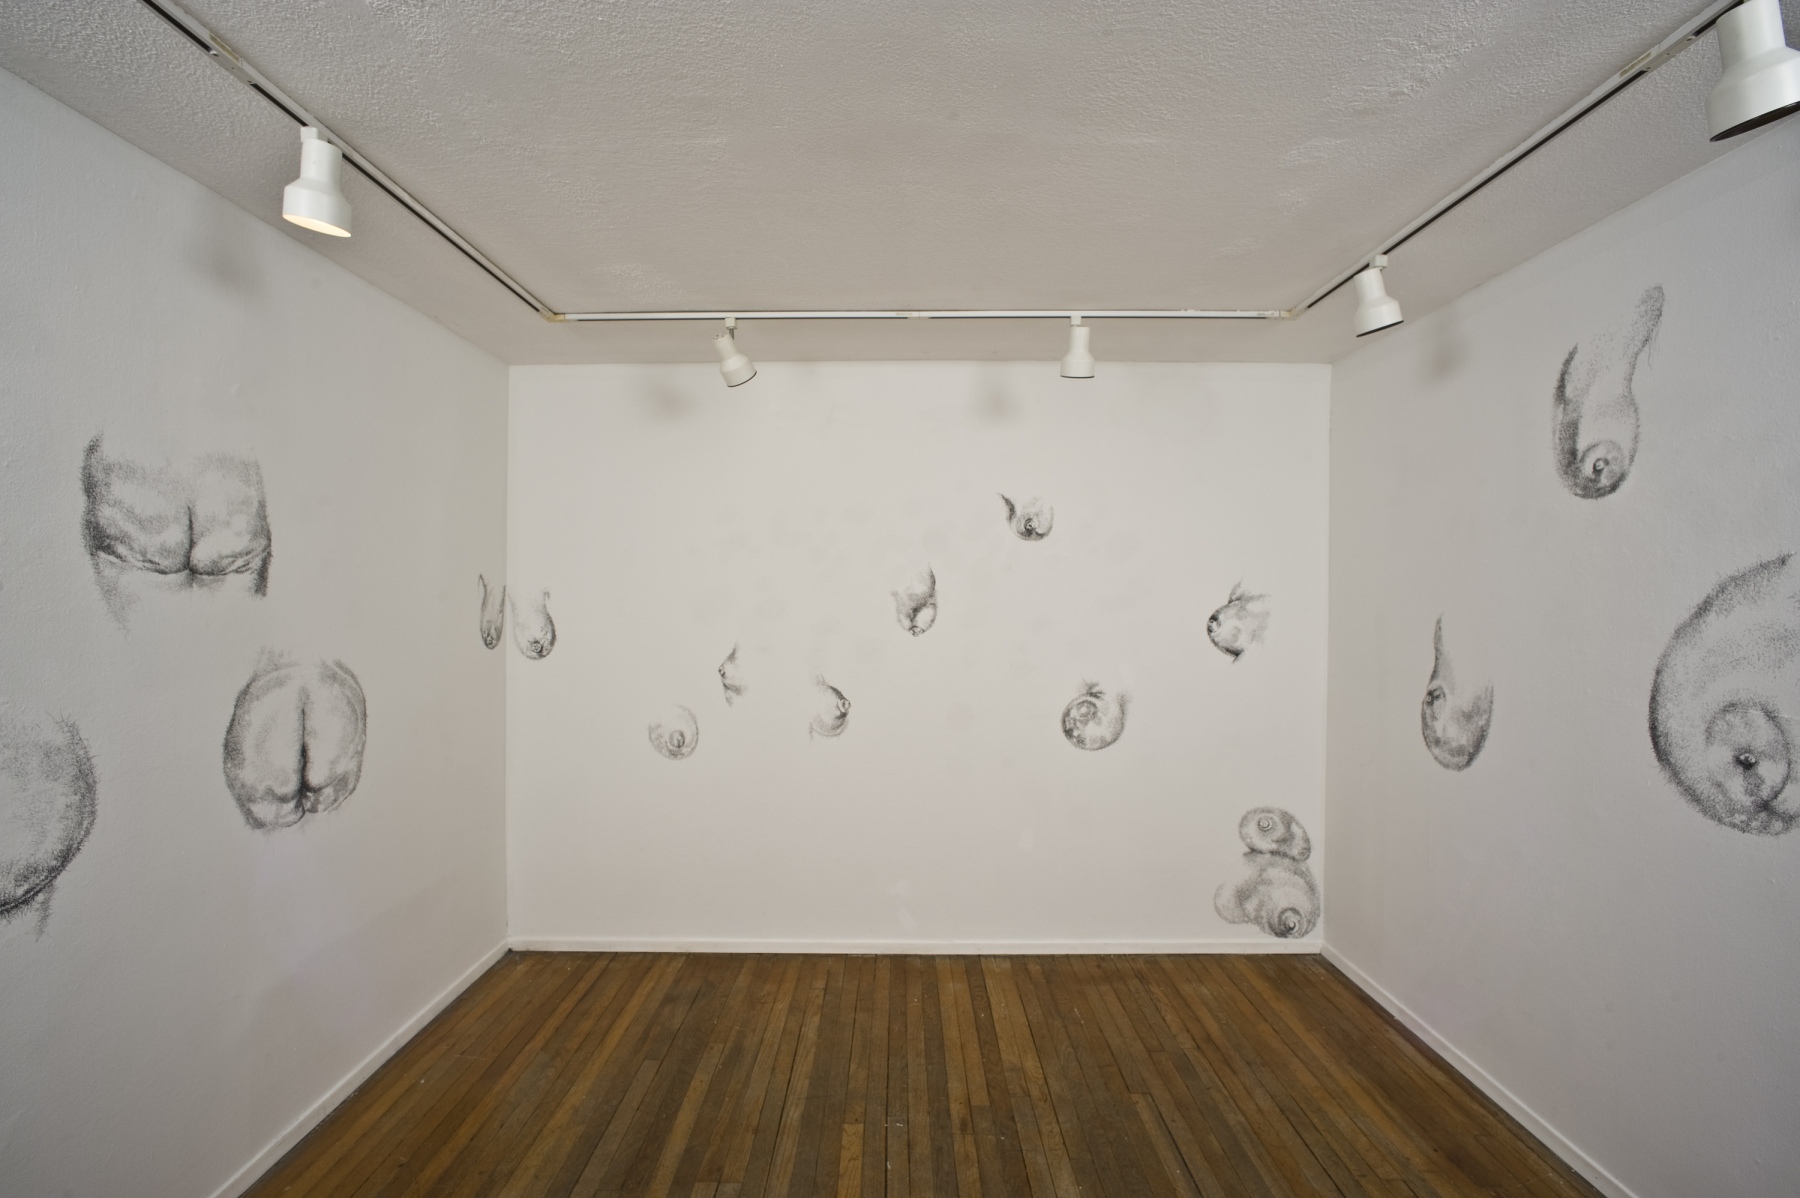 2Kool-2B-4Gotten, 2010, conte on wall, wall drawing installation, Gallery 414, Fort Worth, Texas, three walls in room